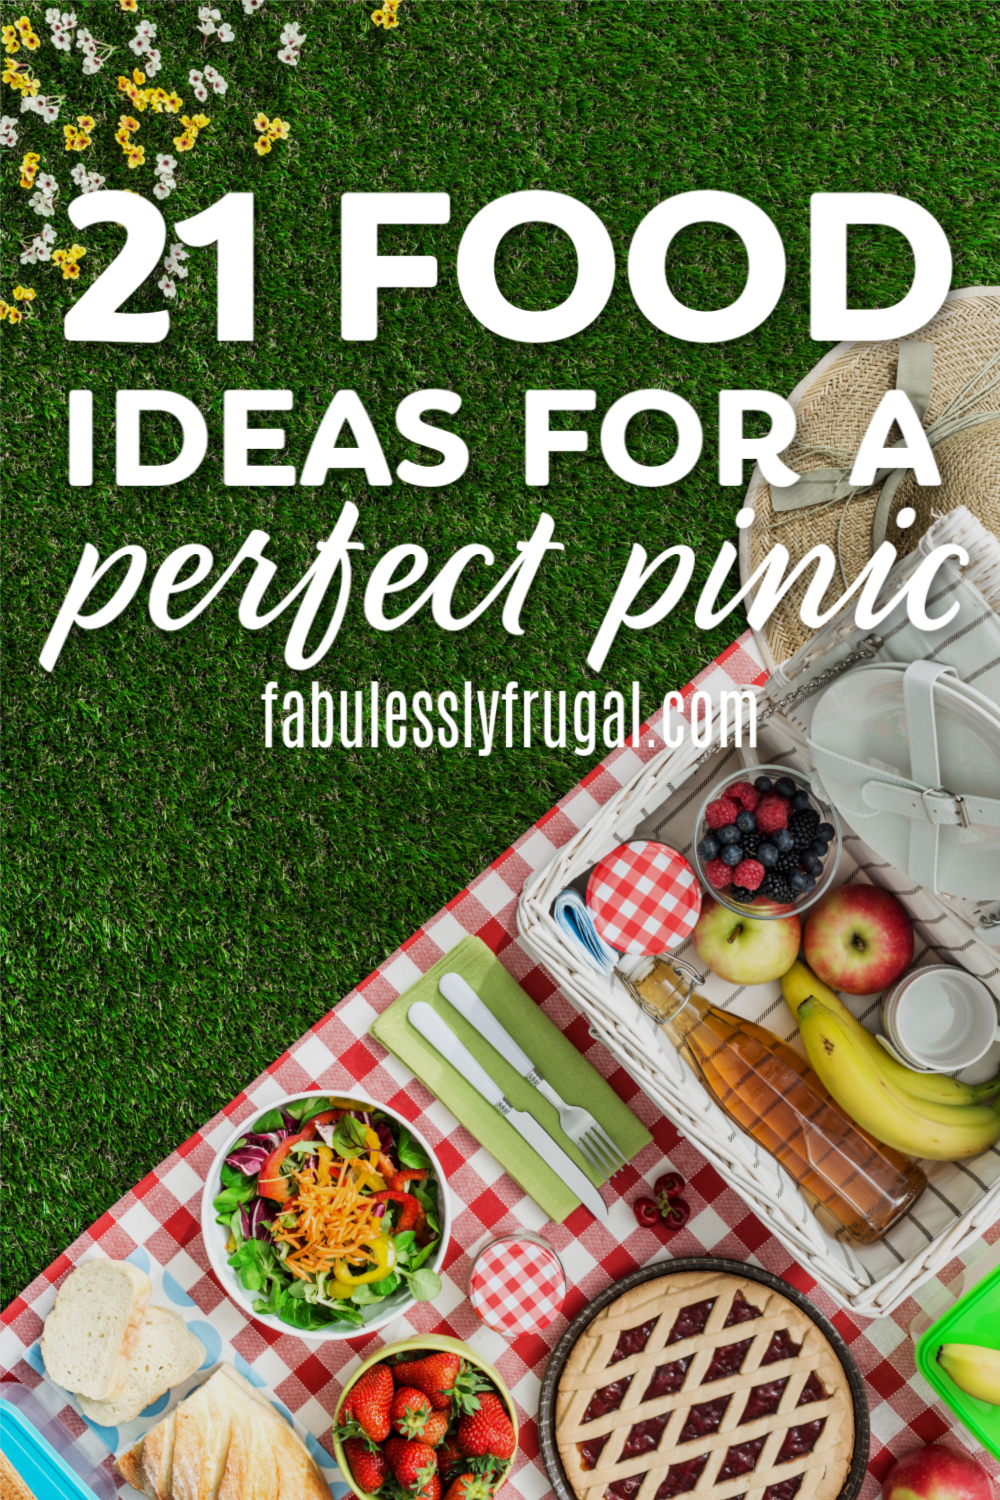 Picnic food ideas